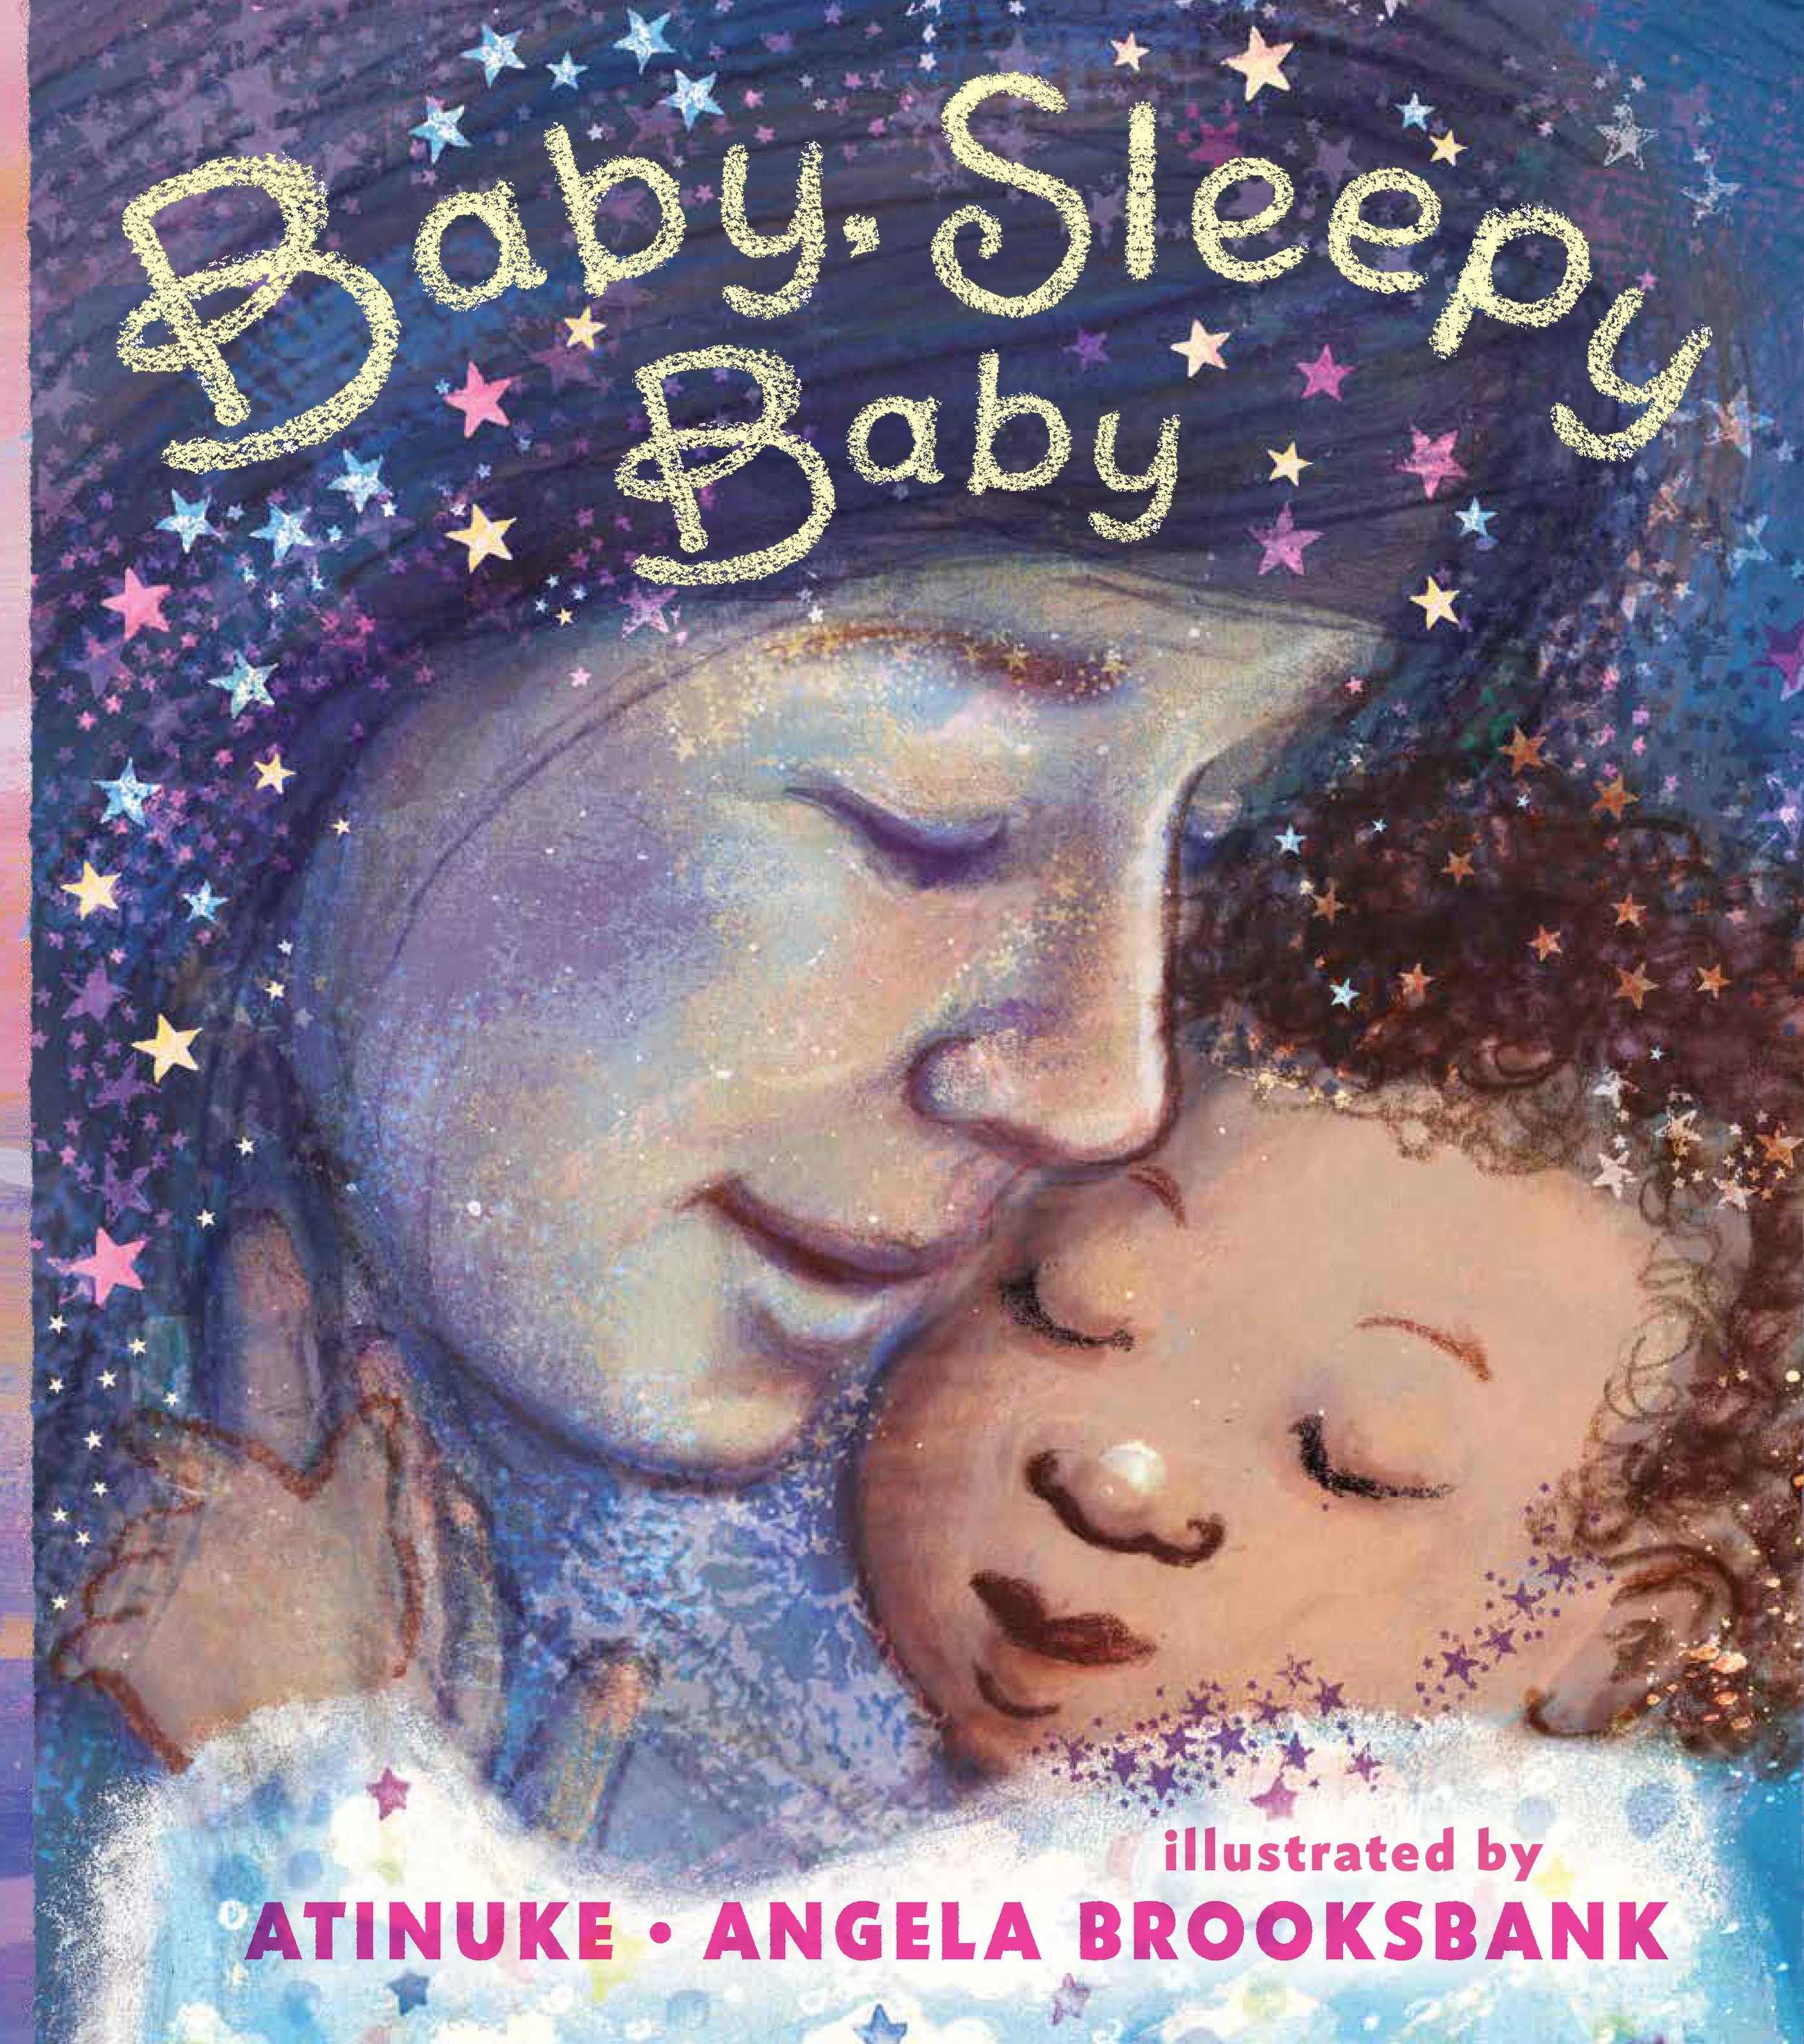 Baby Sleepy Baby Cover.jpg